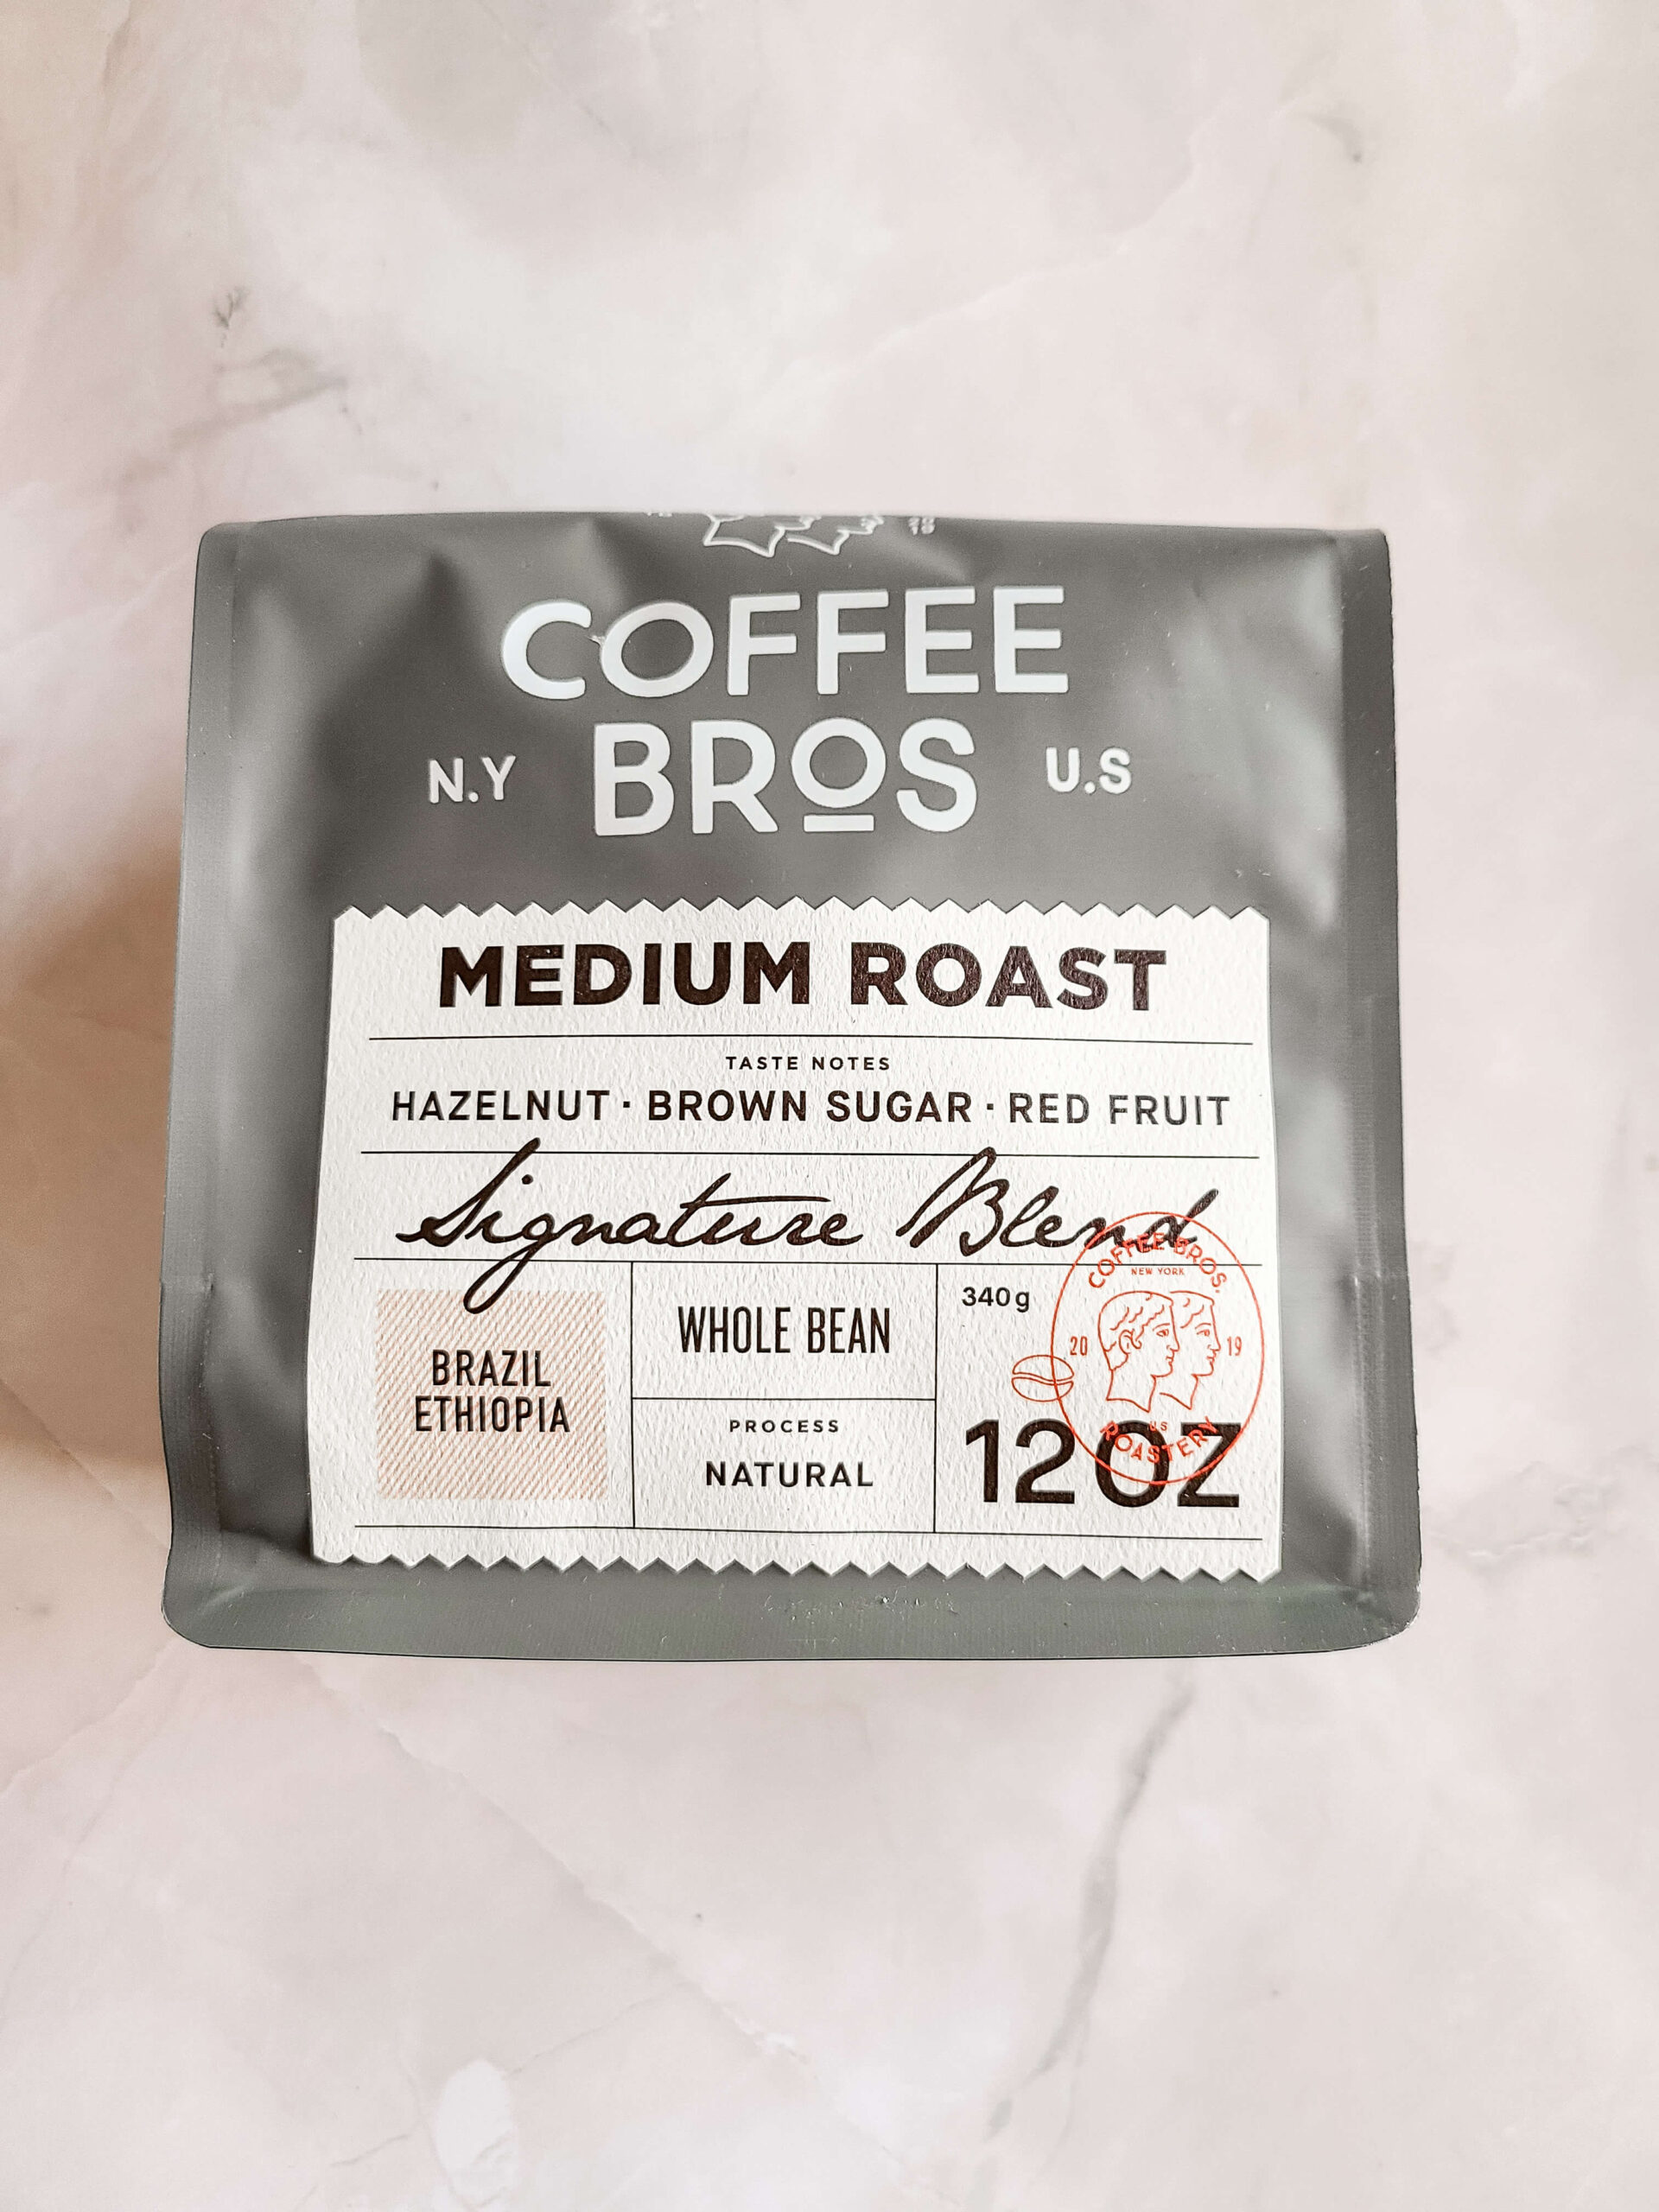 A bag of Medium Roast coffee from Coffee Bros.